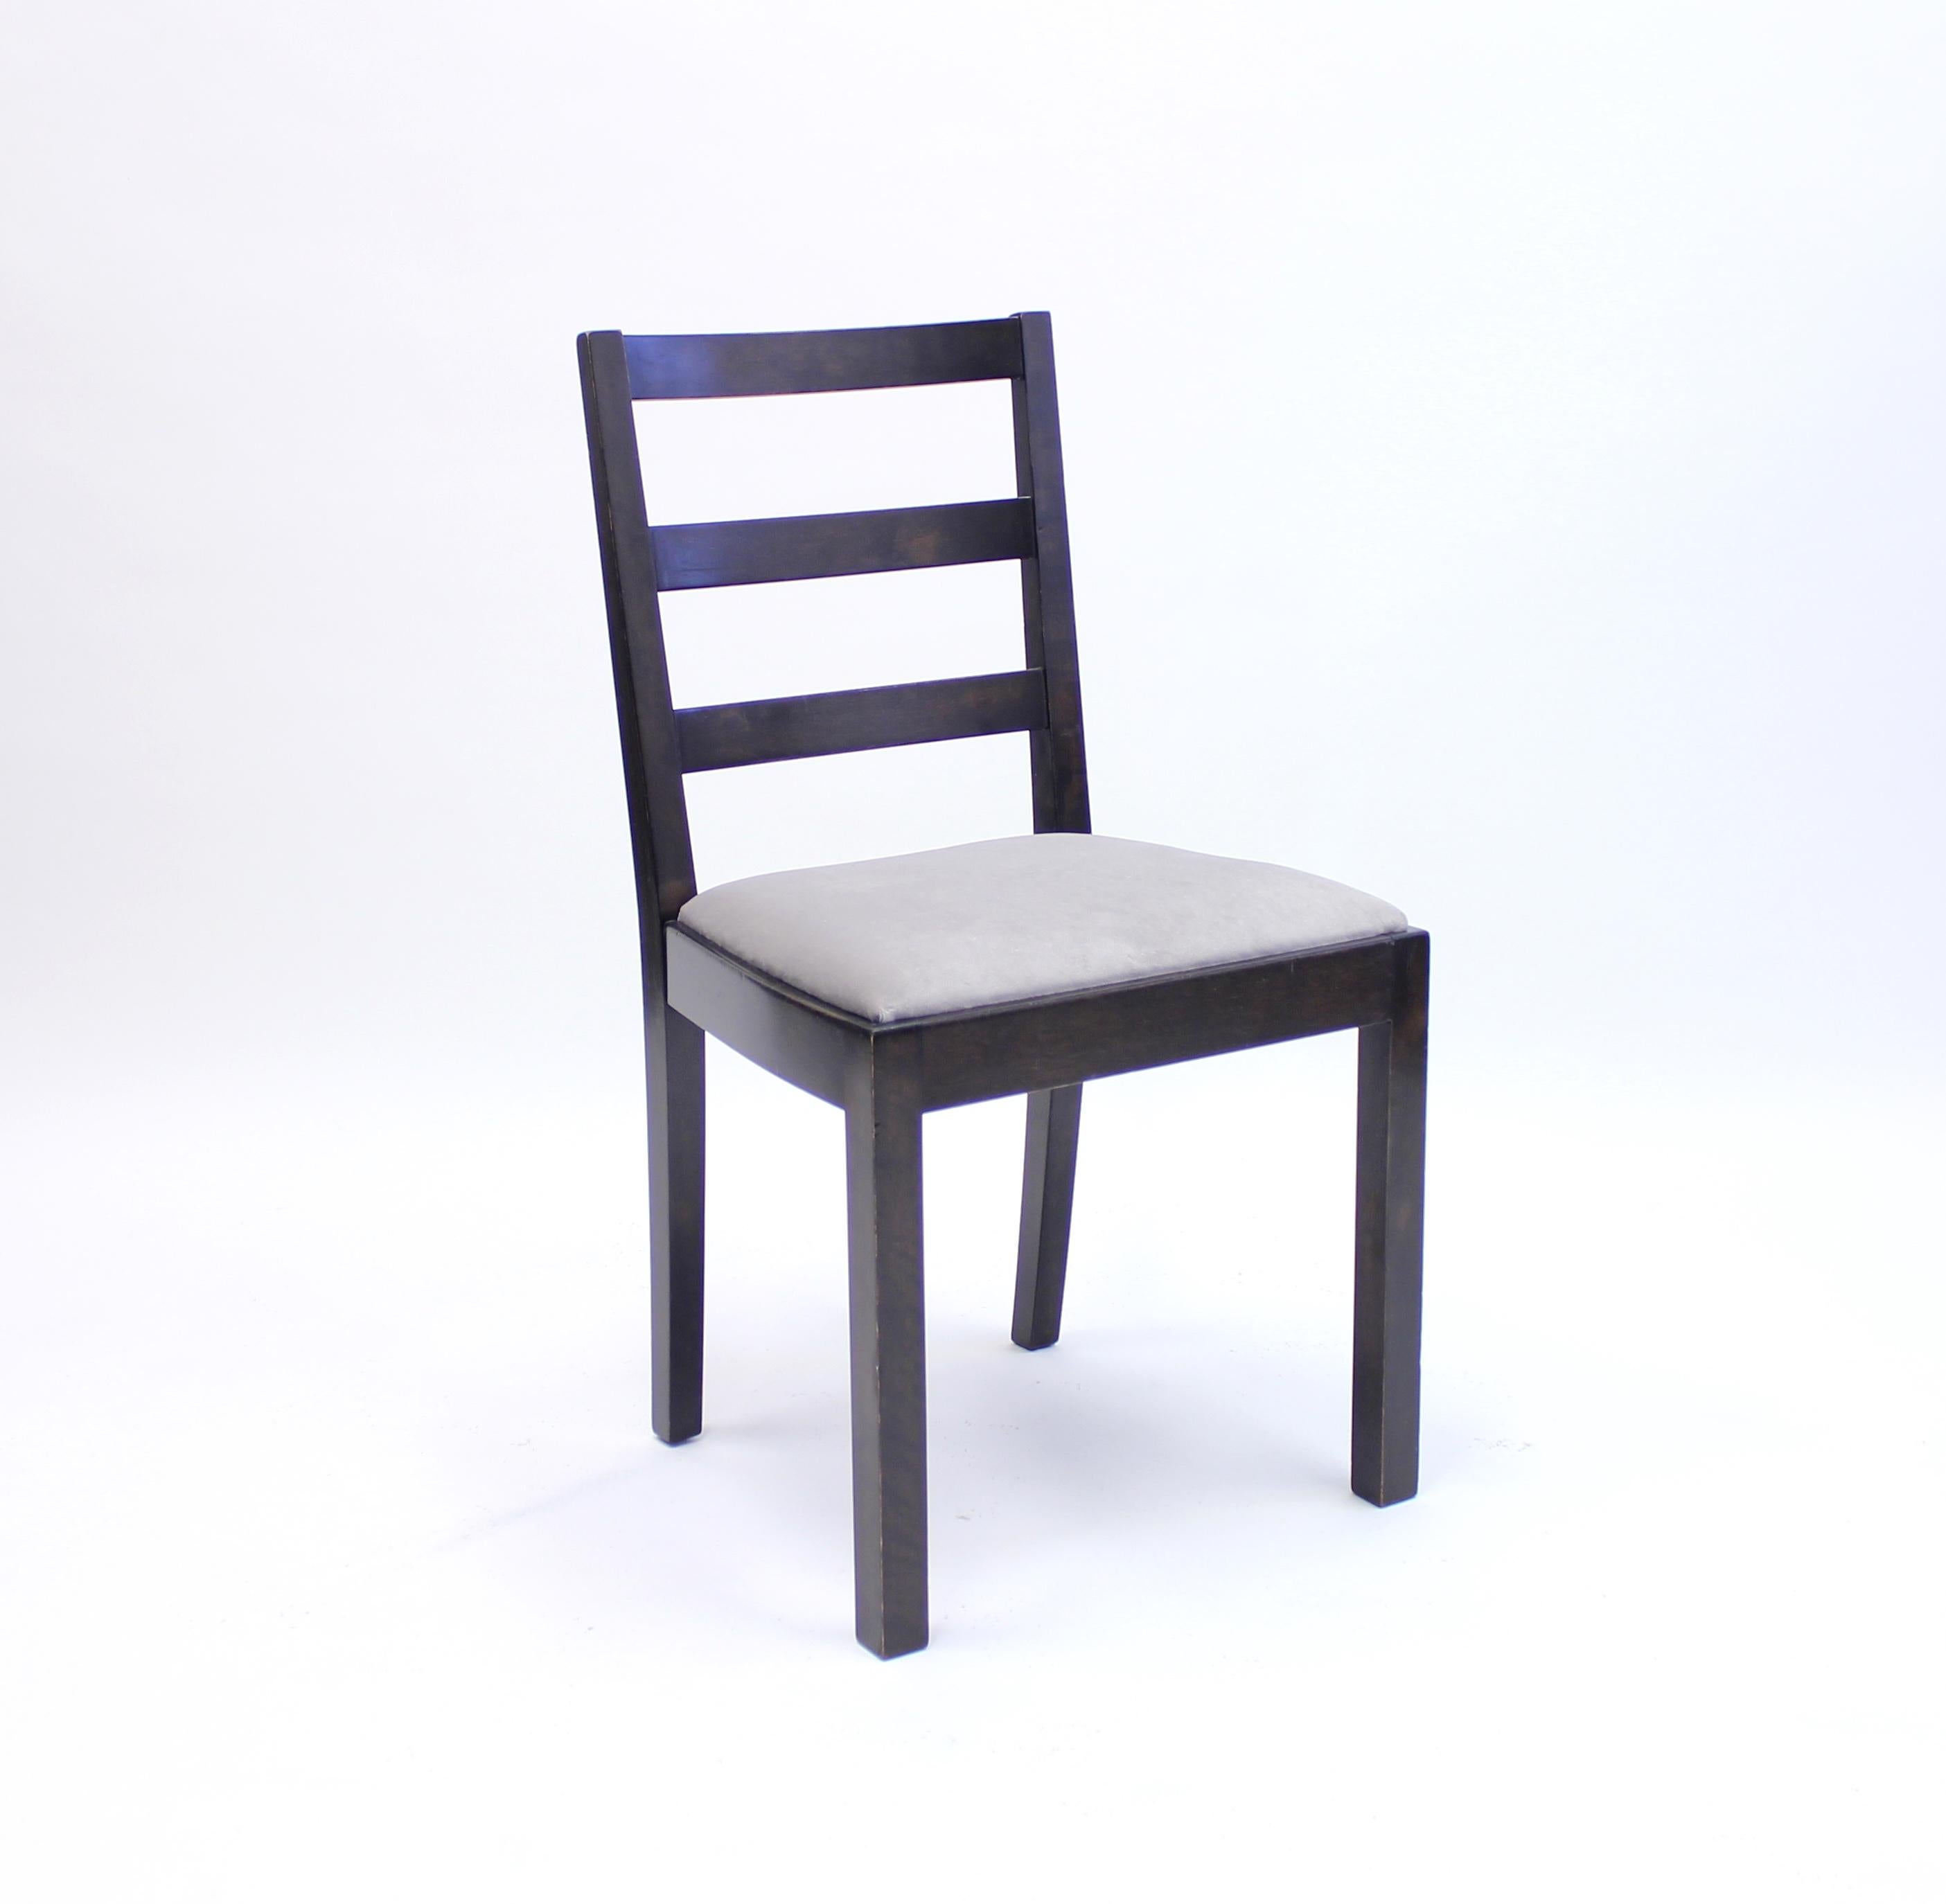 Typenko Chairs by Axel Einar Hjorth for Nordiska Kompaniet, 1930s, Set of 6 1